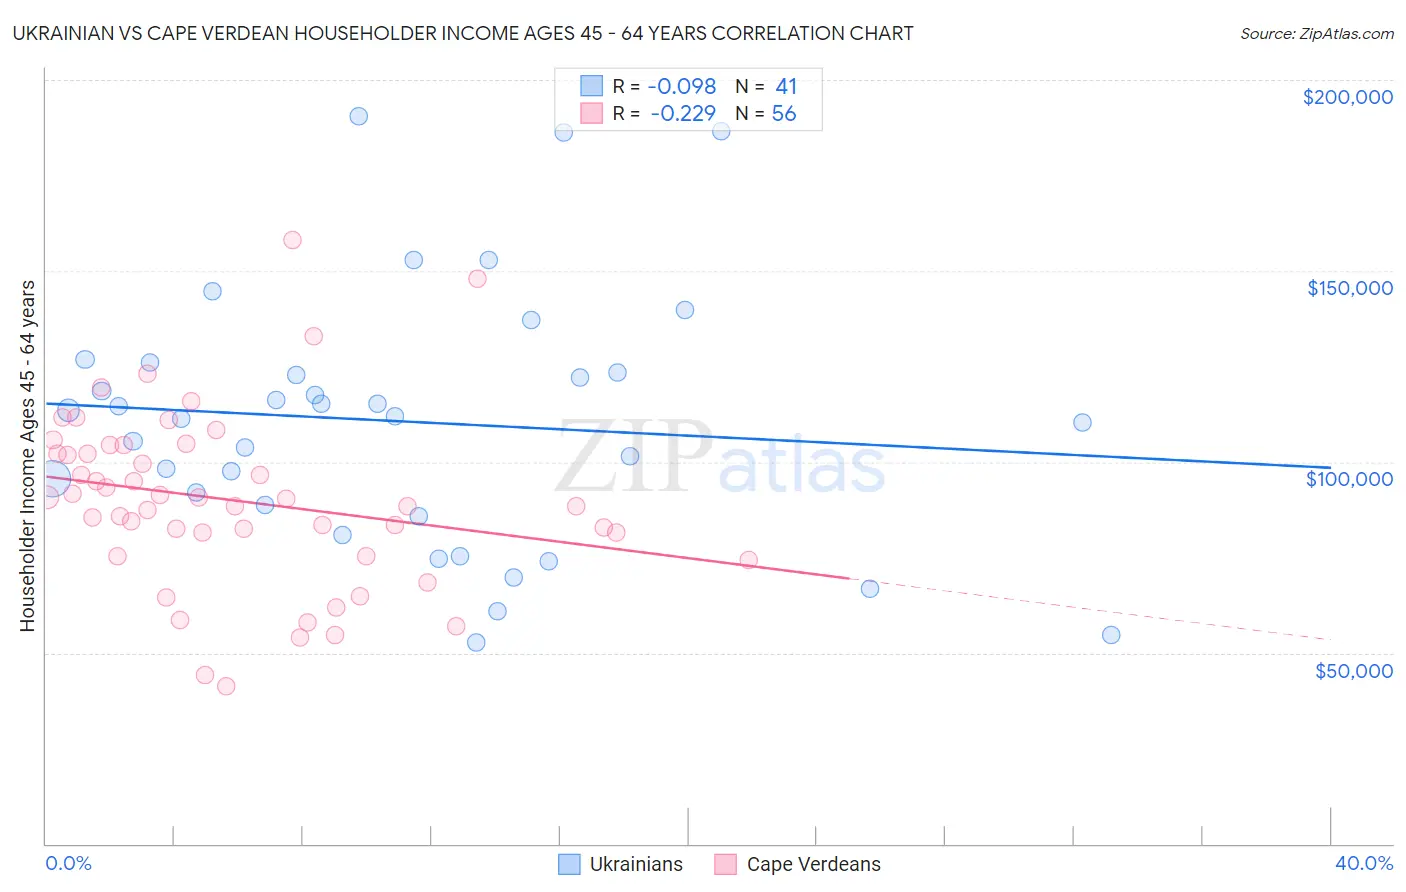 Ukrainian vs Cape Verdean Householder Income Ages 45 - 64 years